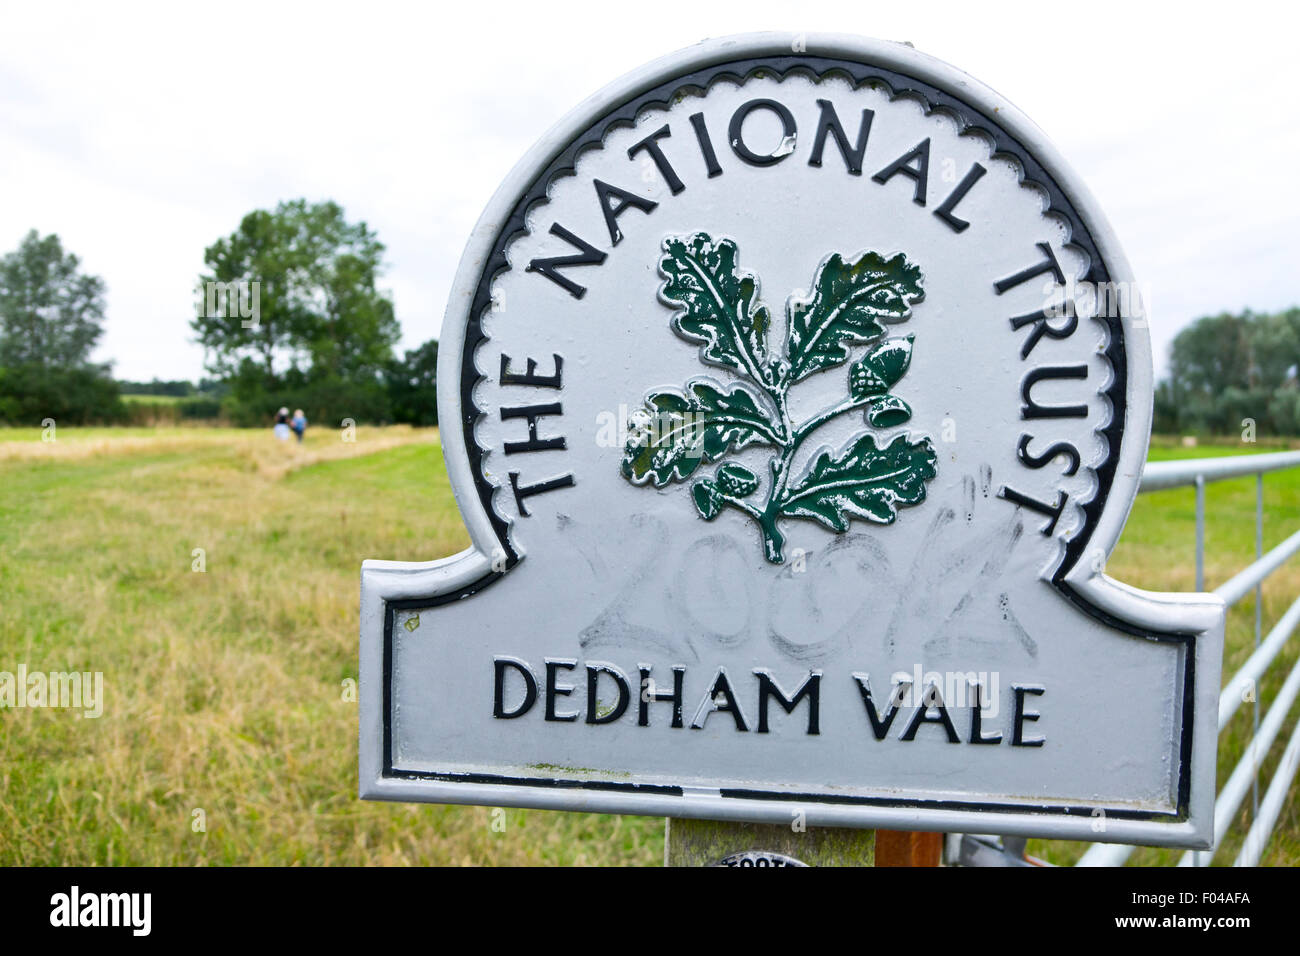 Nation trust  sign Dedham Vale Stock Photo